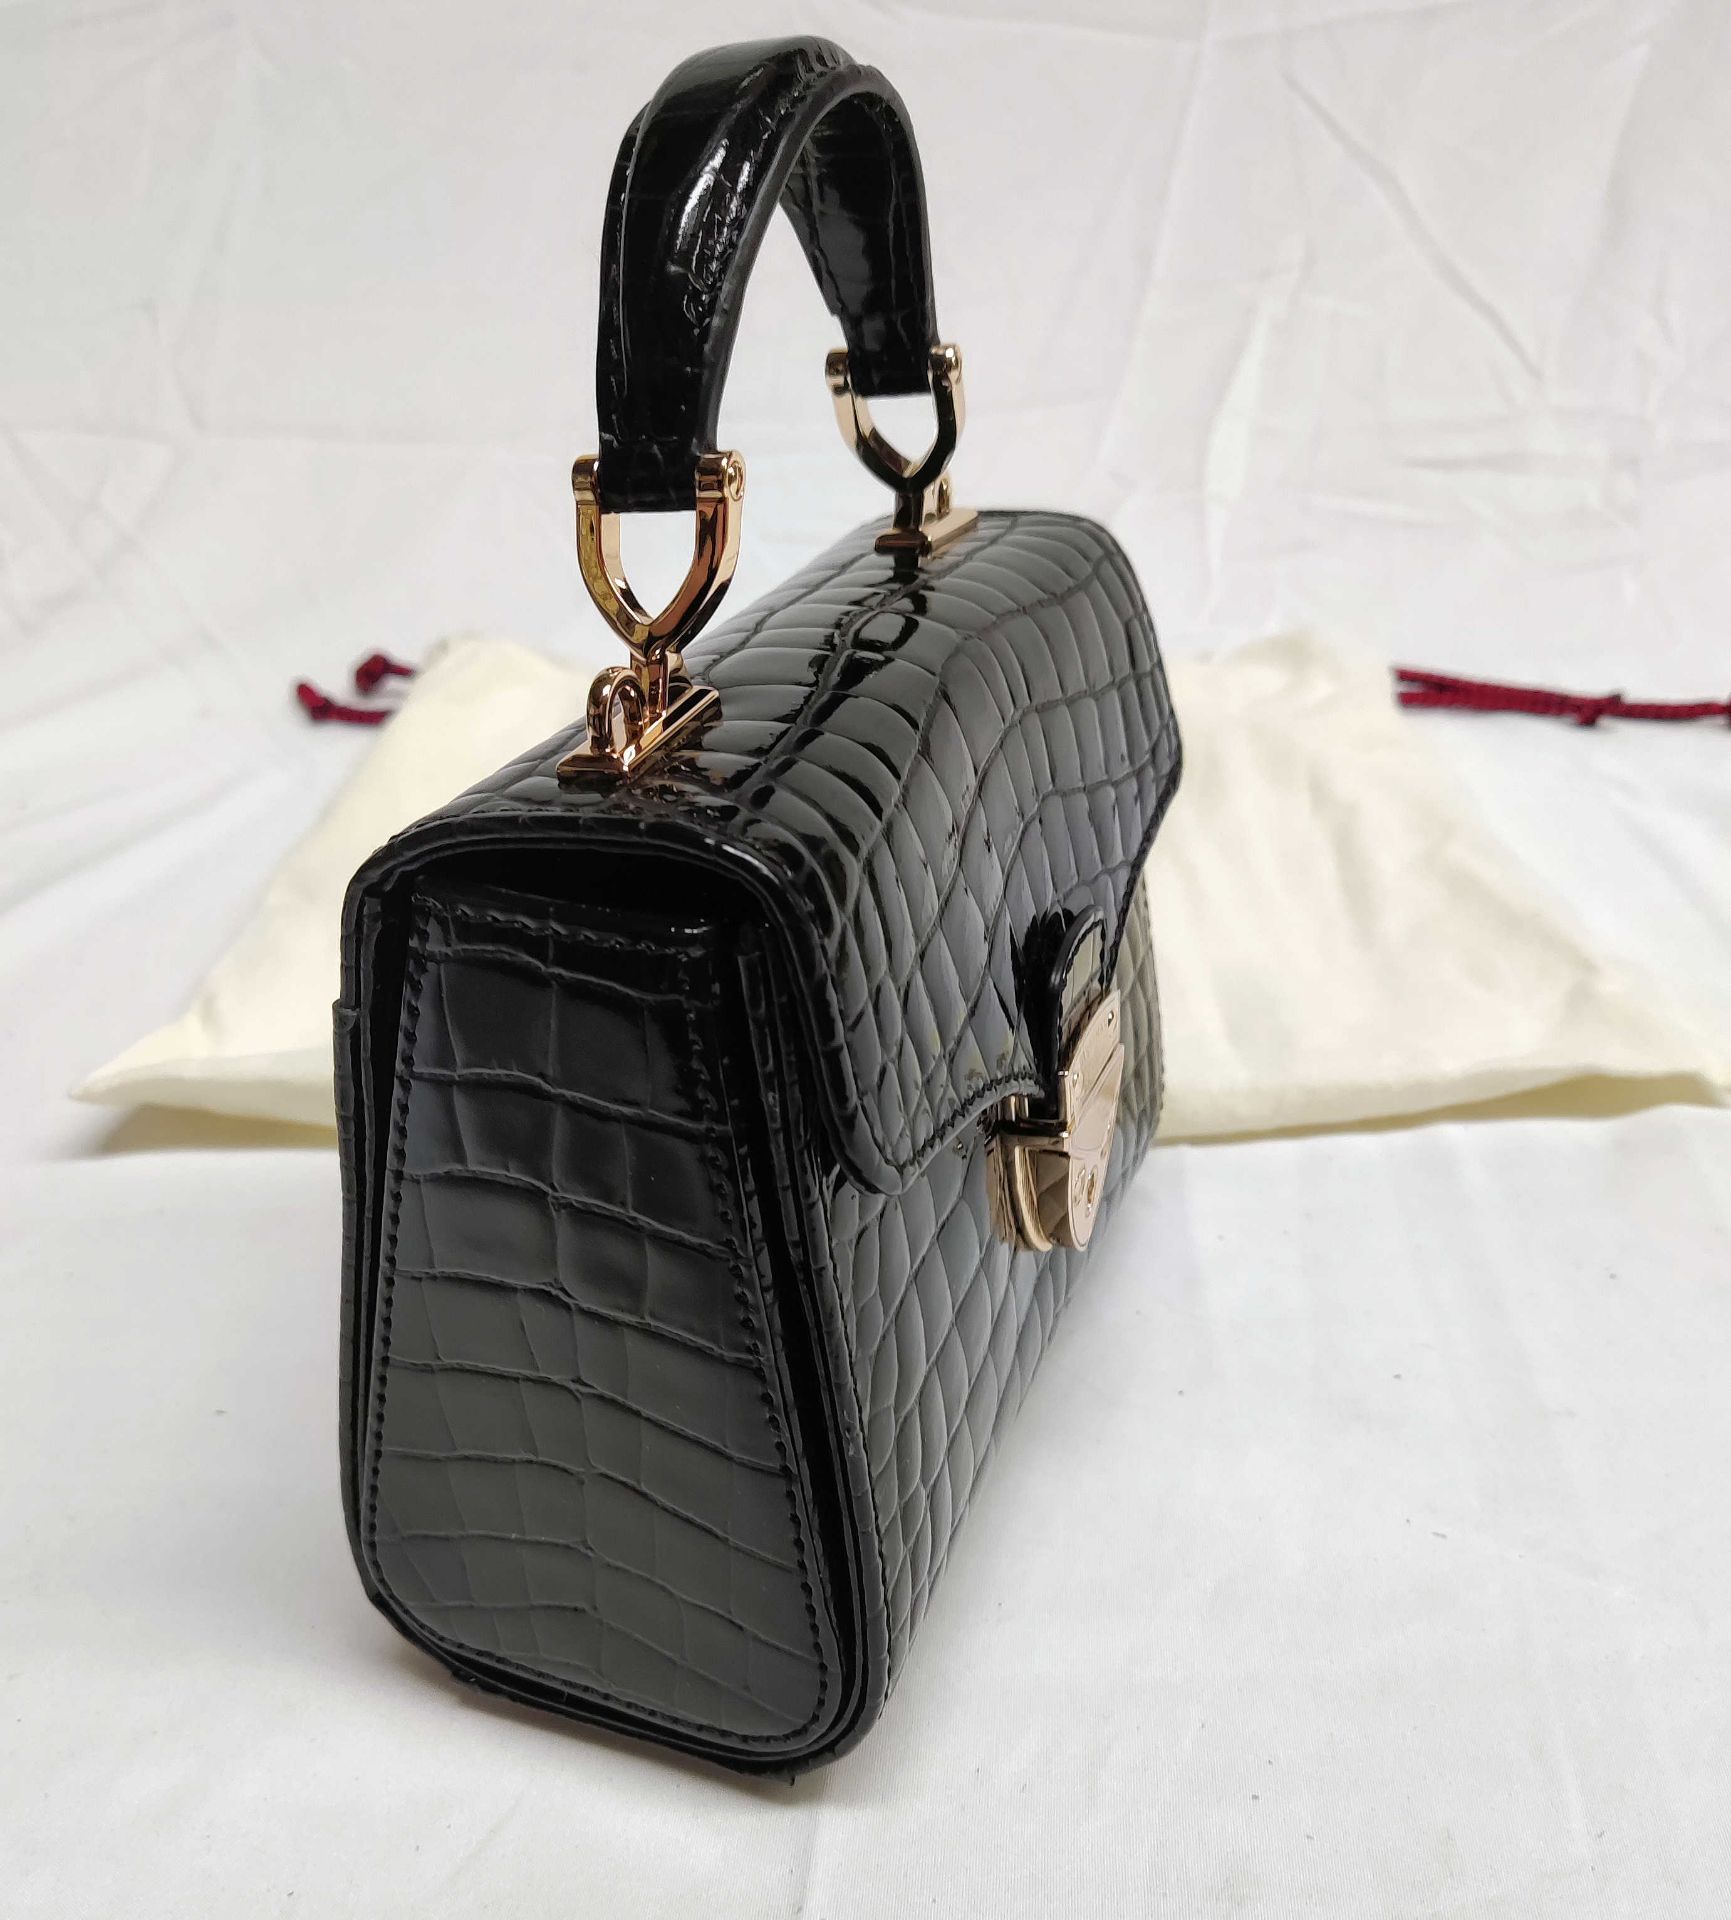 1 x ASPINAL OF LONDON Mayfair Micro Deep Shine Small Croc Bag In Black - Boxed - Original RRP £495 - - Image 5 of 17